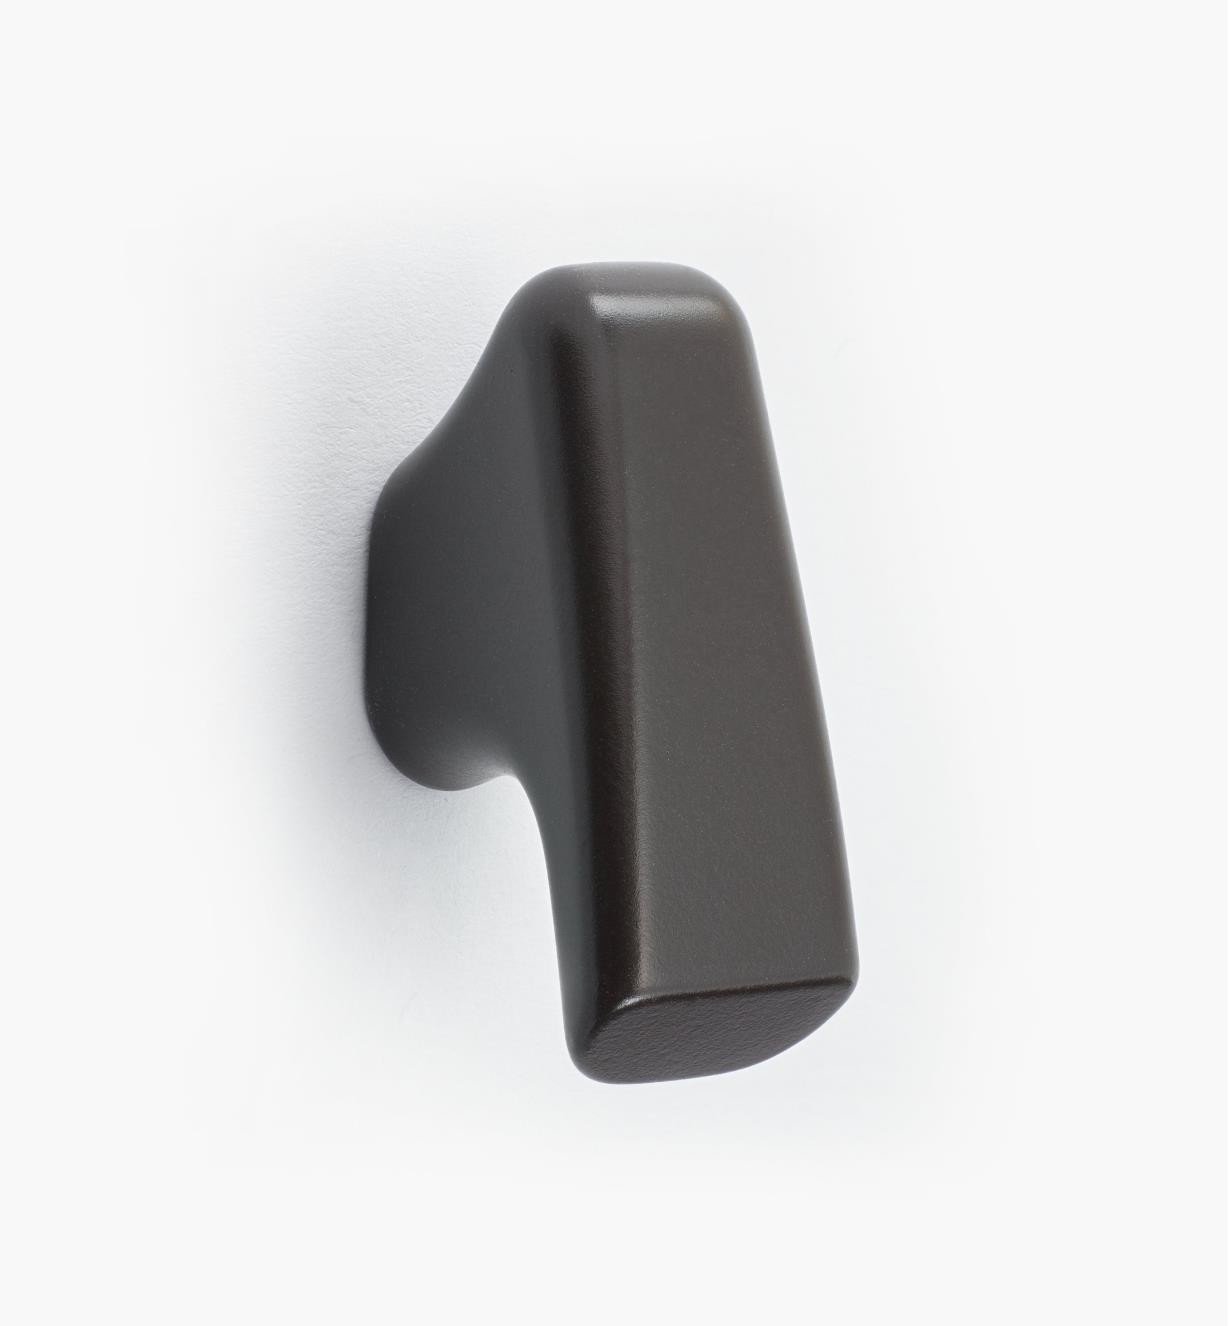 02W1460 - Wind 40mm Oil-Rubbed Bronze Finger Pull